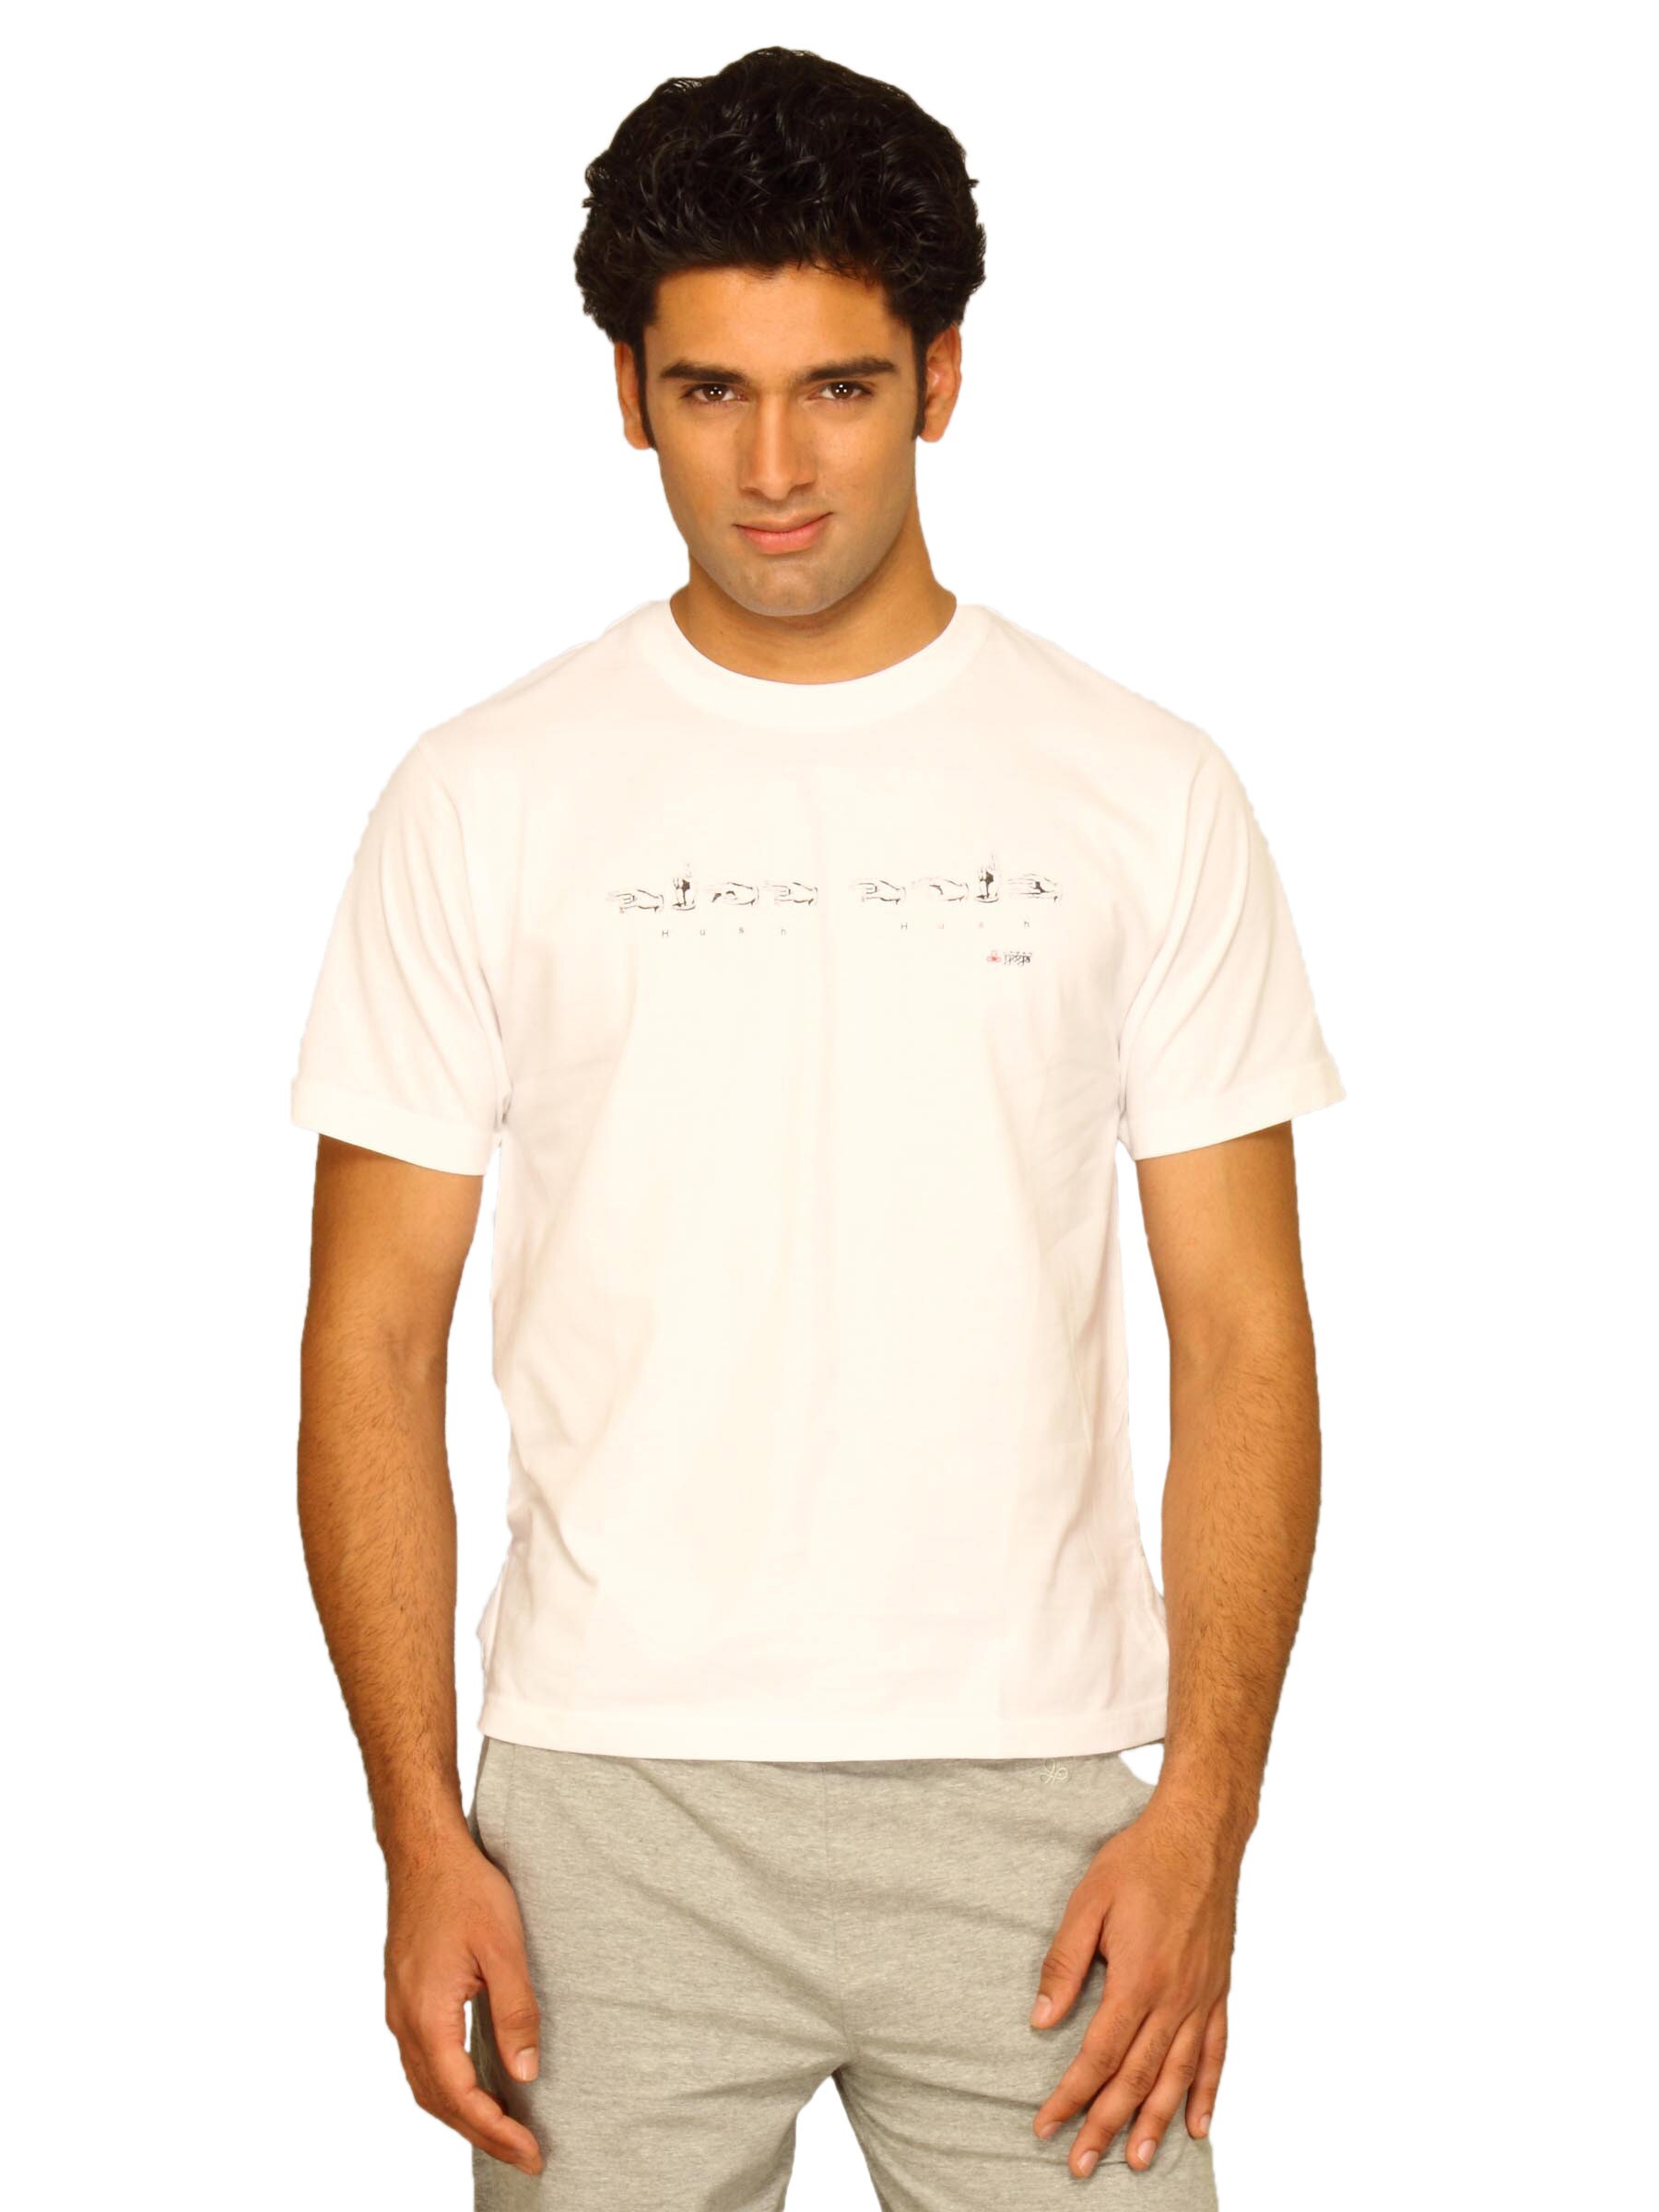 Urban Yoga Men's Hush White T-shirt